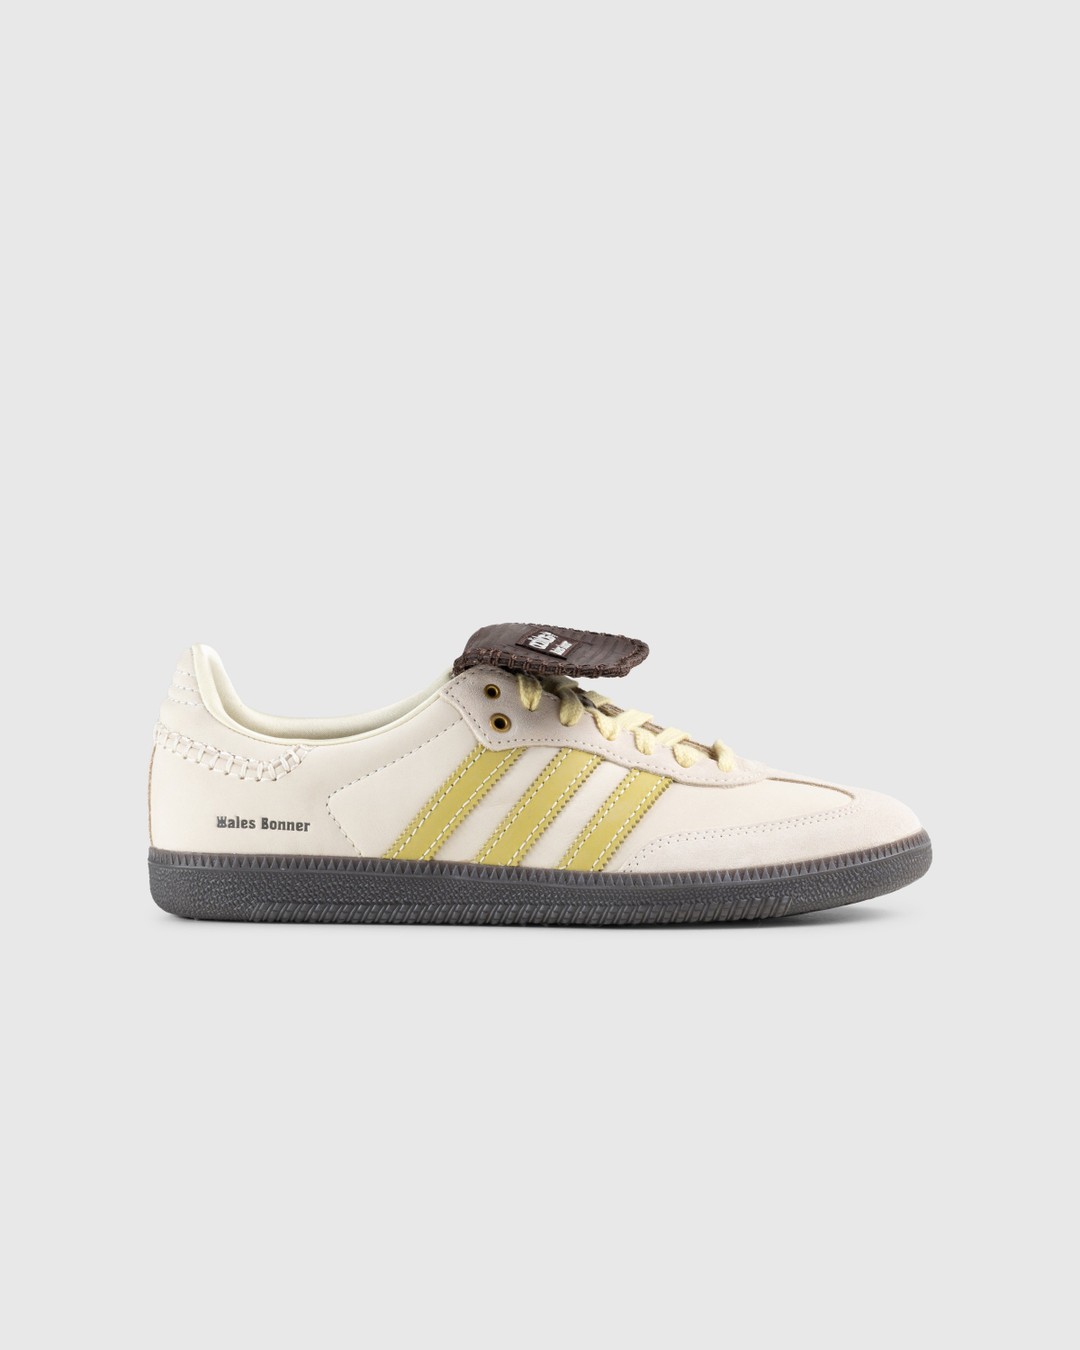 Adidas x Wales Bonner – Samba Nubuck Ecru Tint/Almost Yellow/Dark Brown - Sneakers - Beige - Image 1